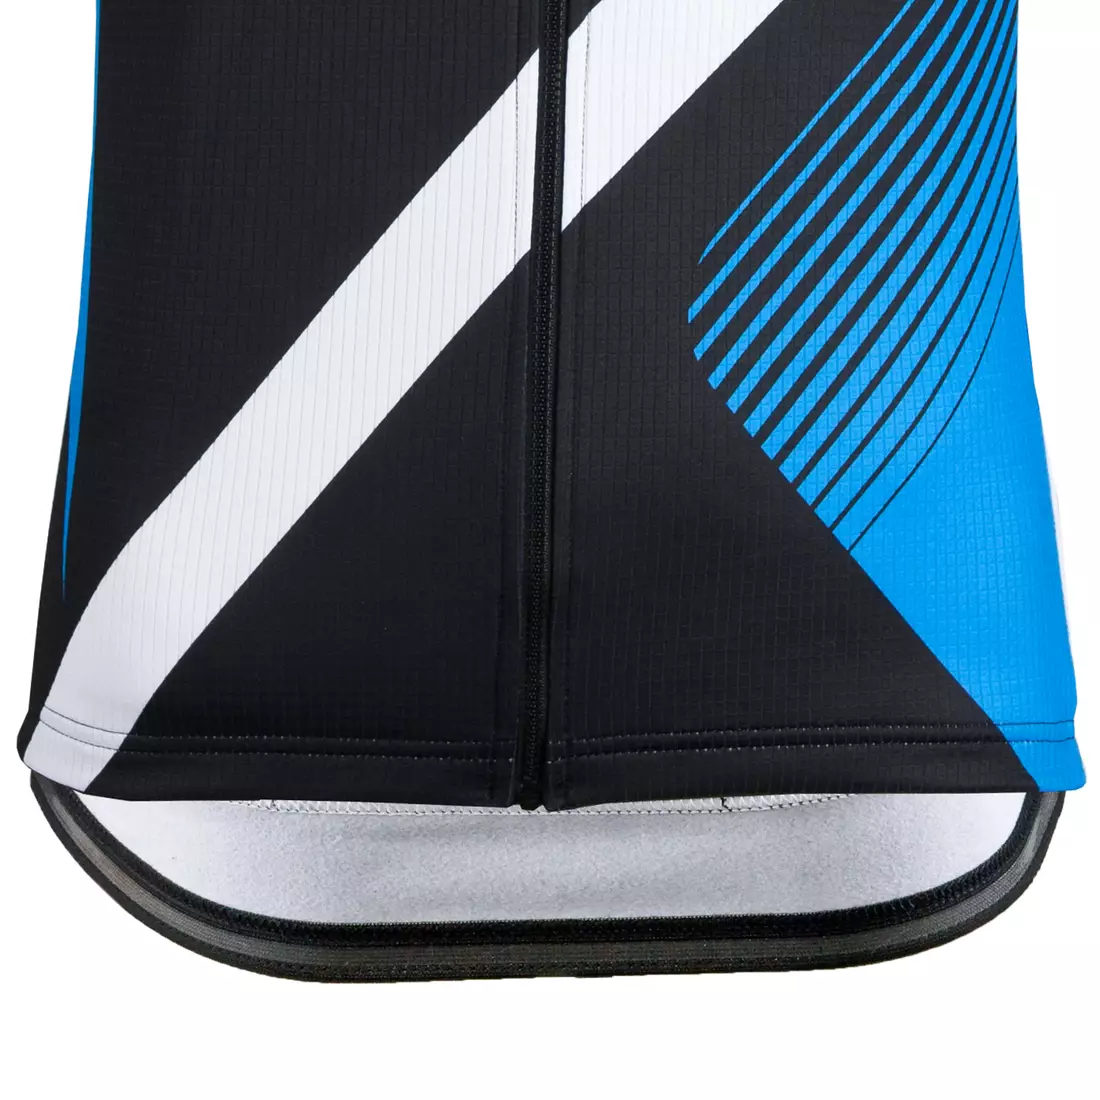 KAYMAQ DESIGN M27 pánsky cyklistický dres, modrý